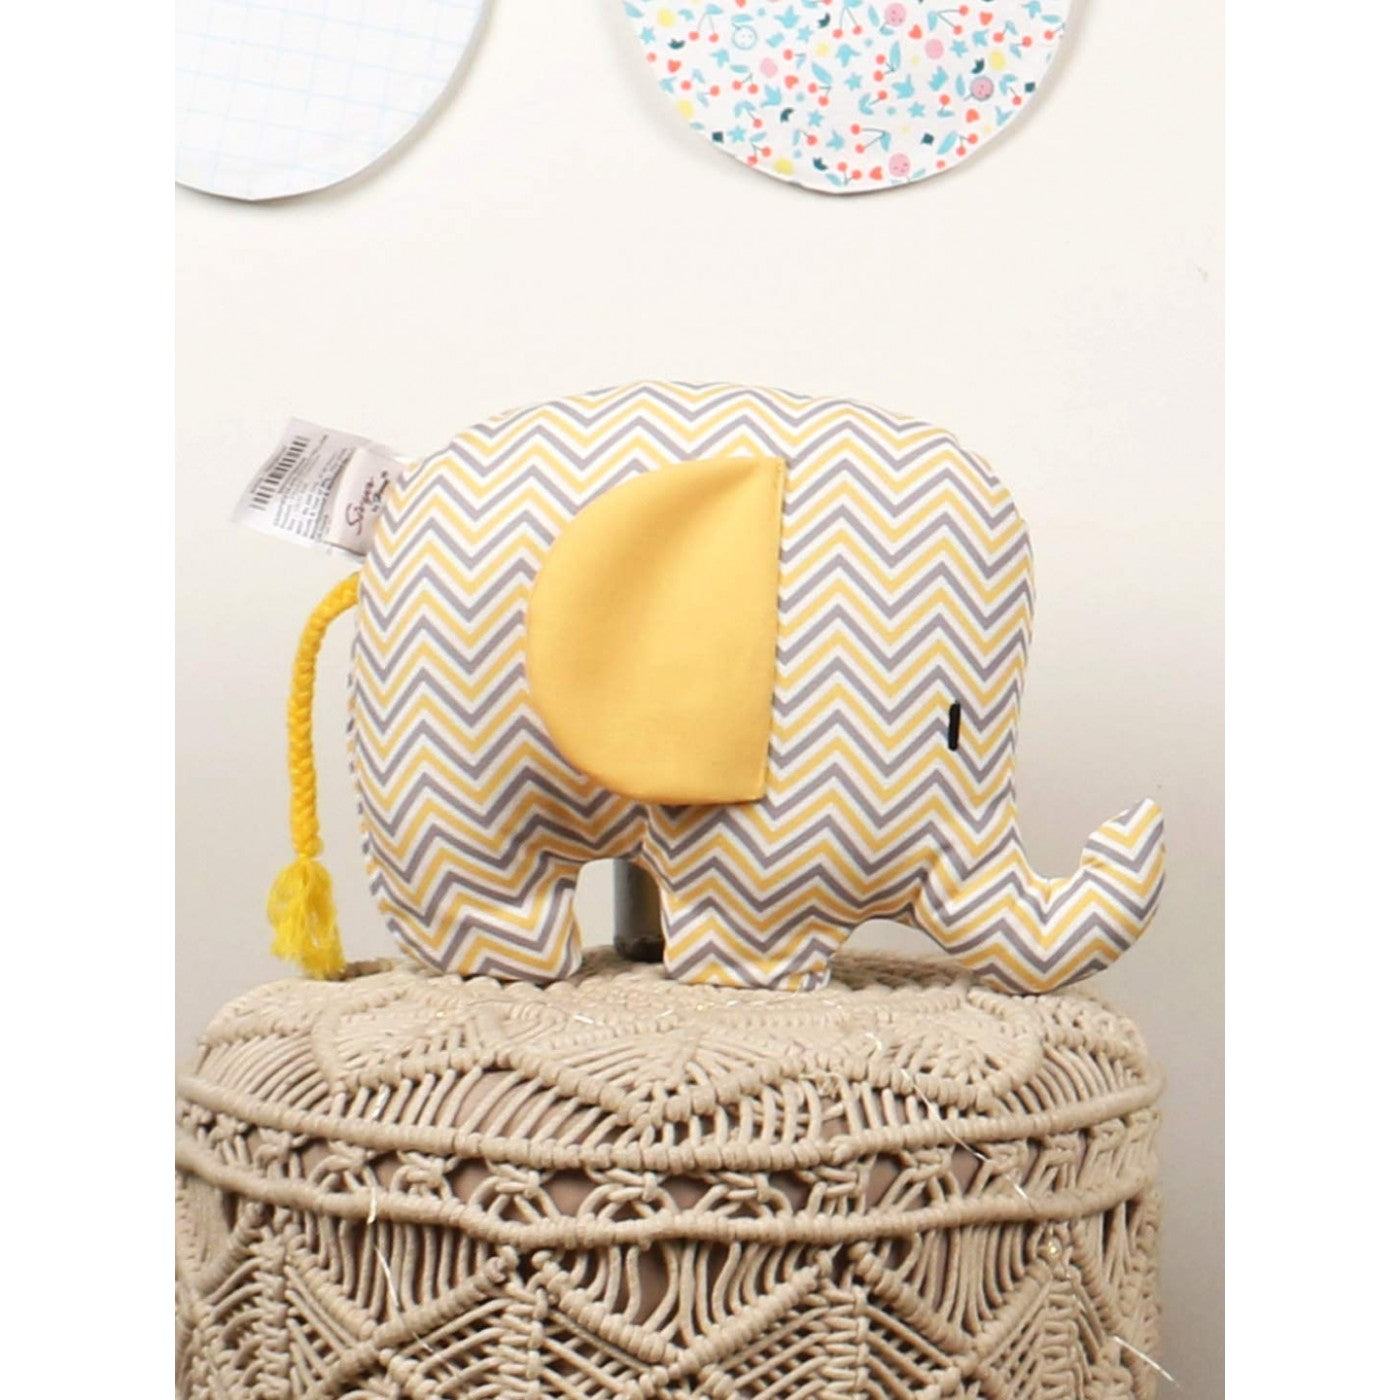 Playful Pachyderm: Printed Elephant Shape Cushion for Kids